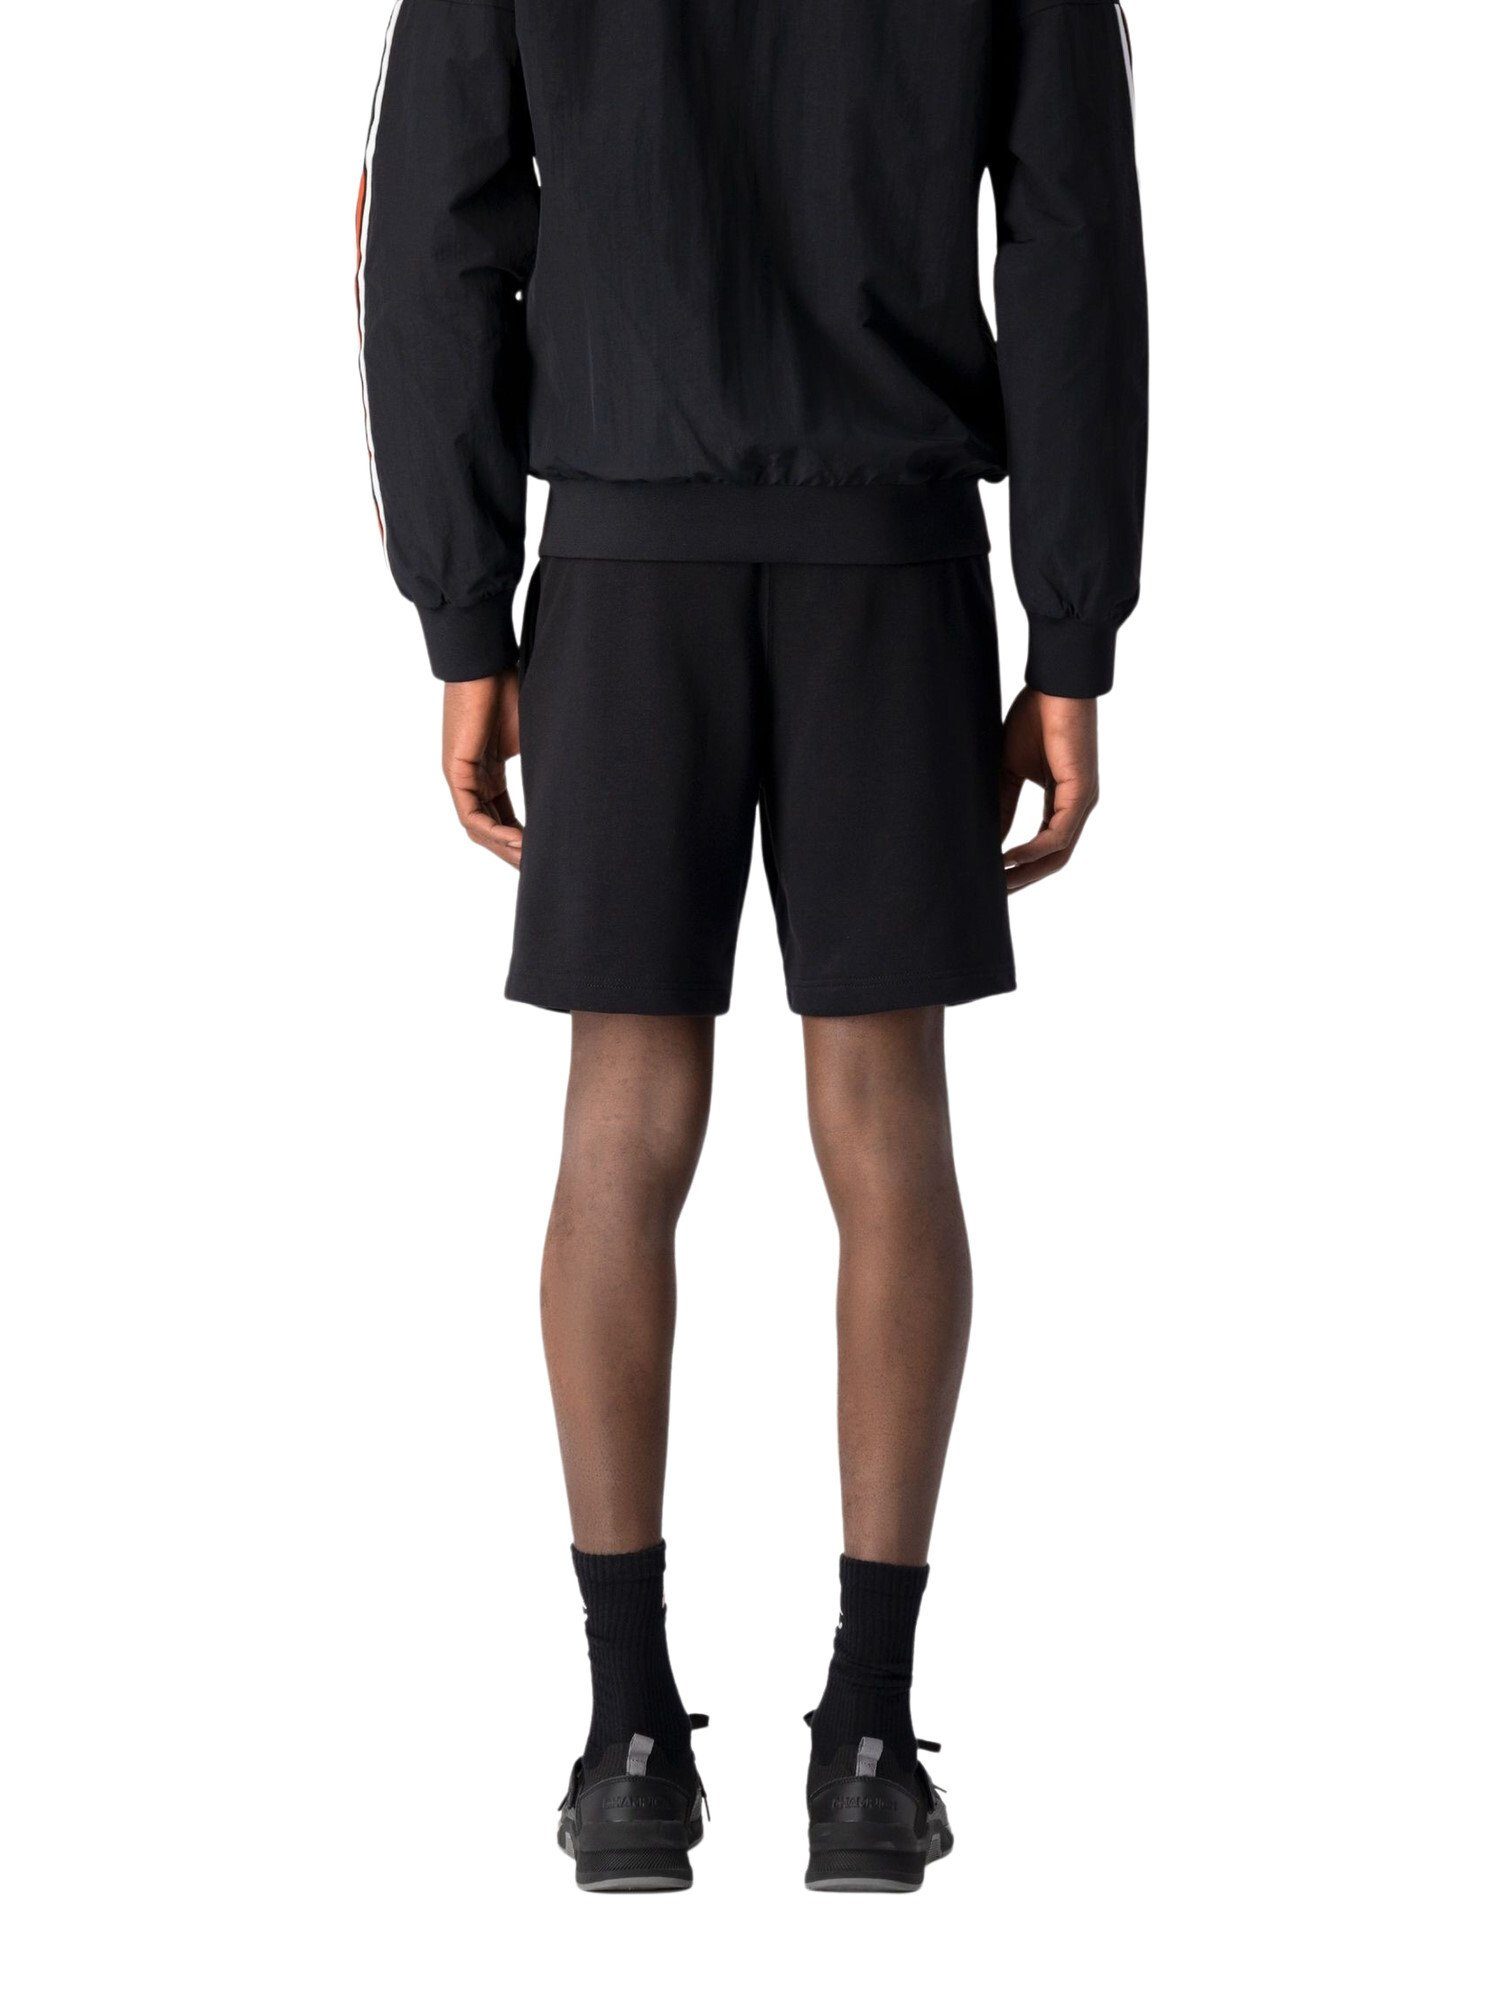 Champion Sweatshorts Shorts Bermuda-Fleece-Shorts mit schwarz